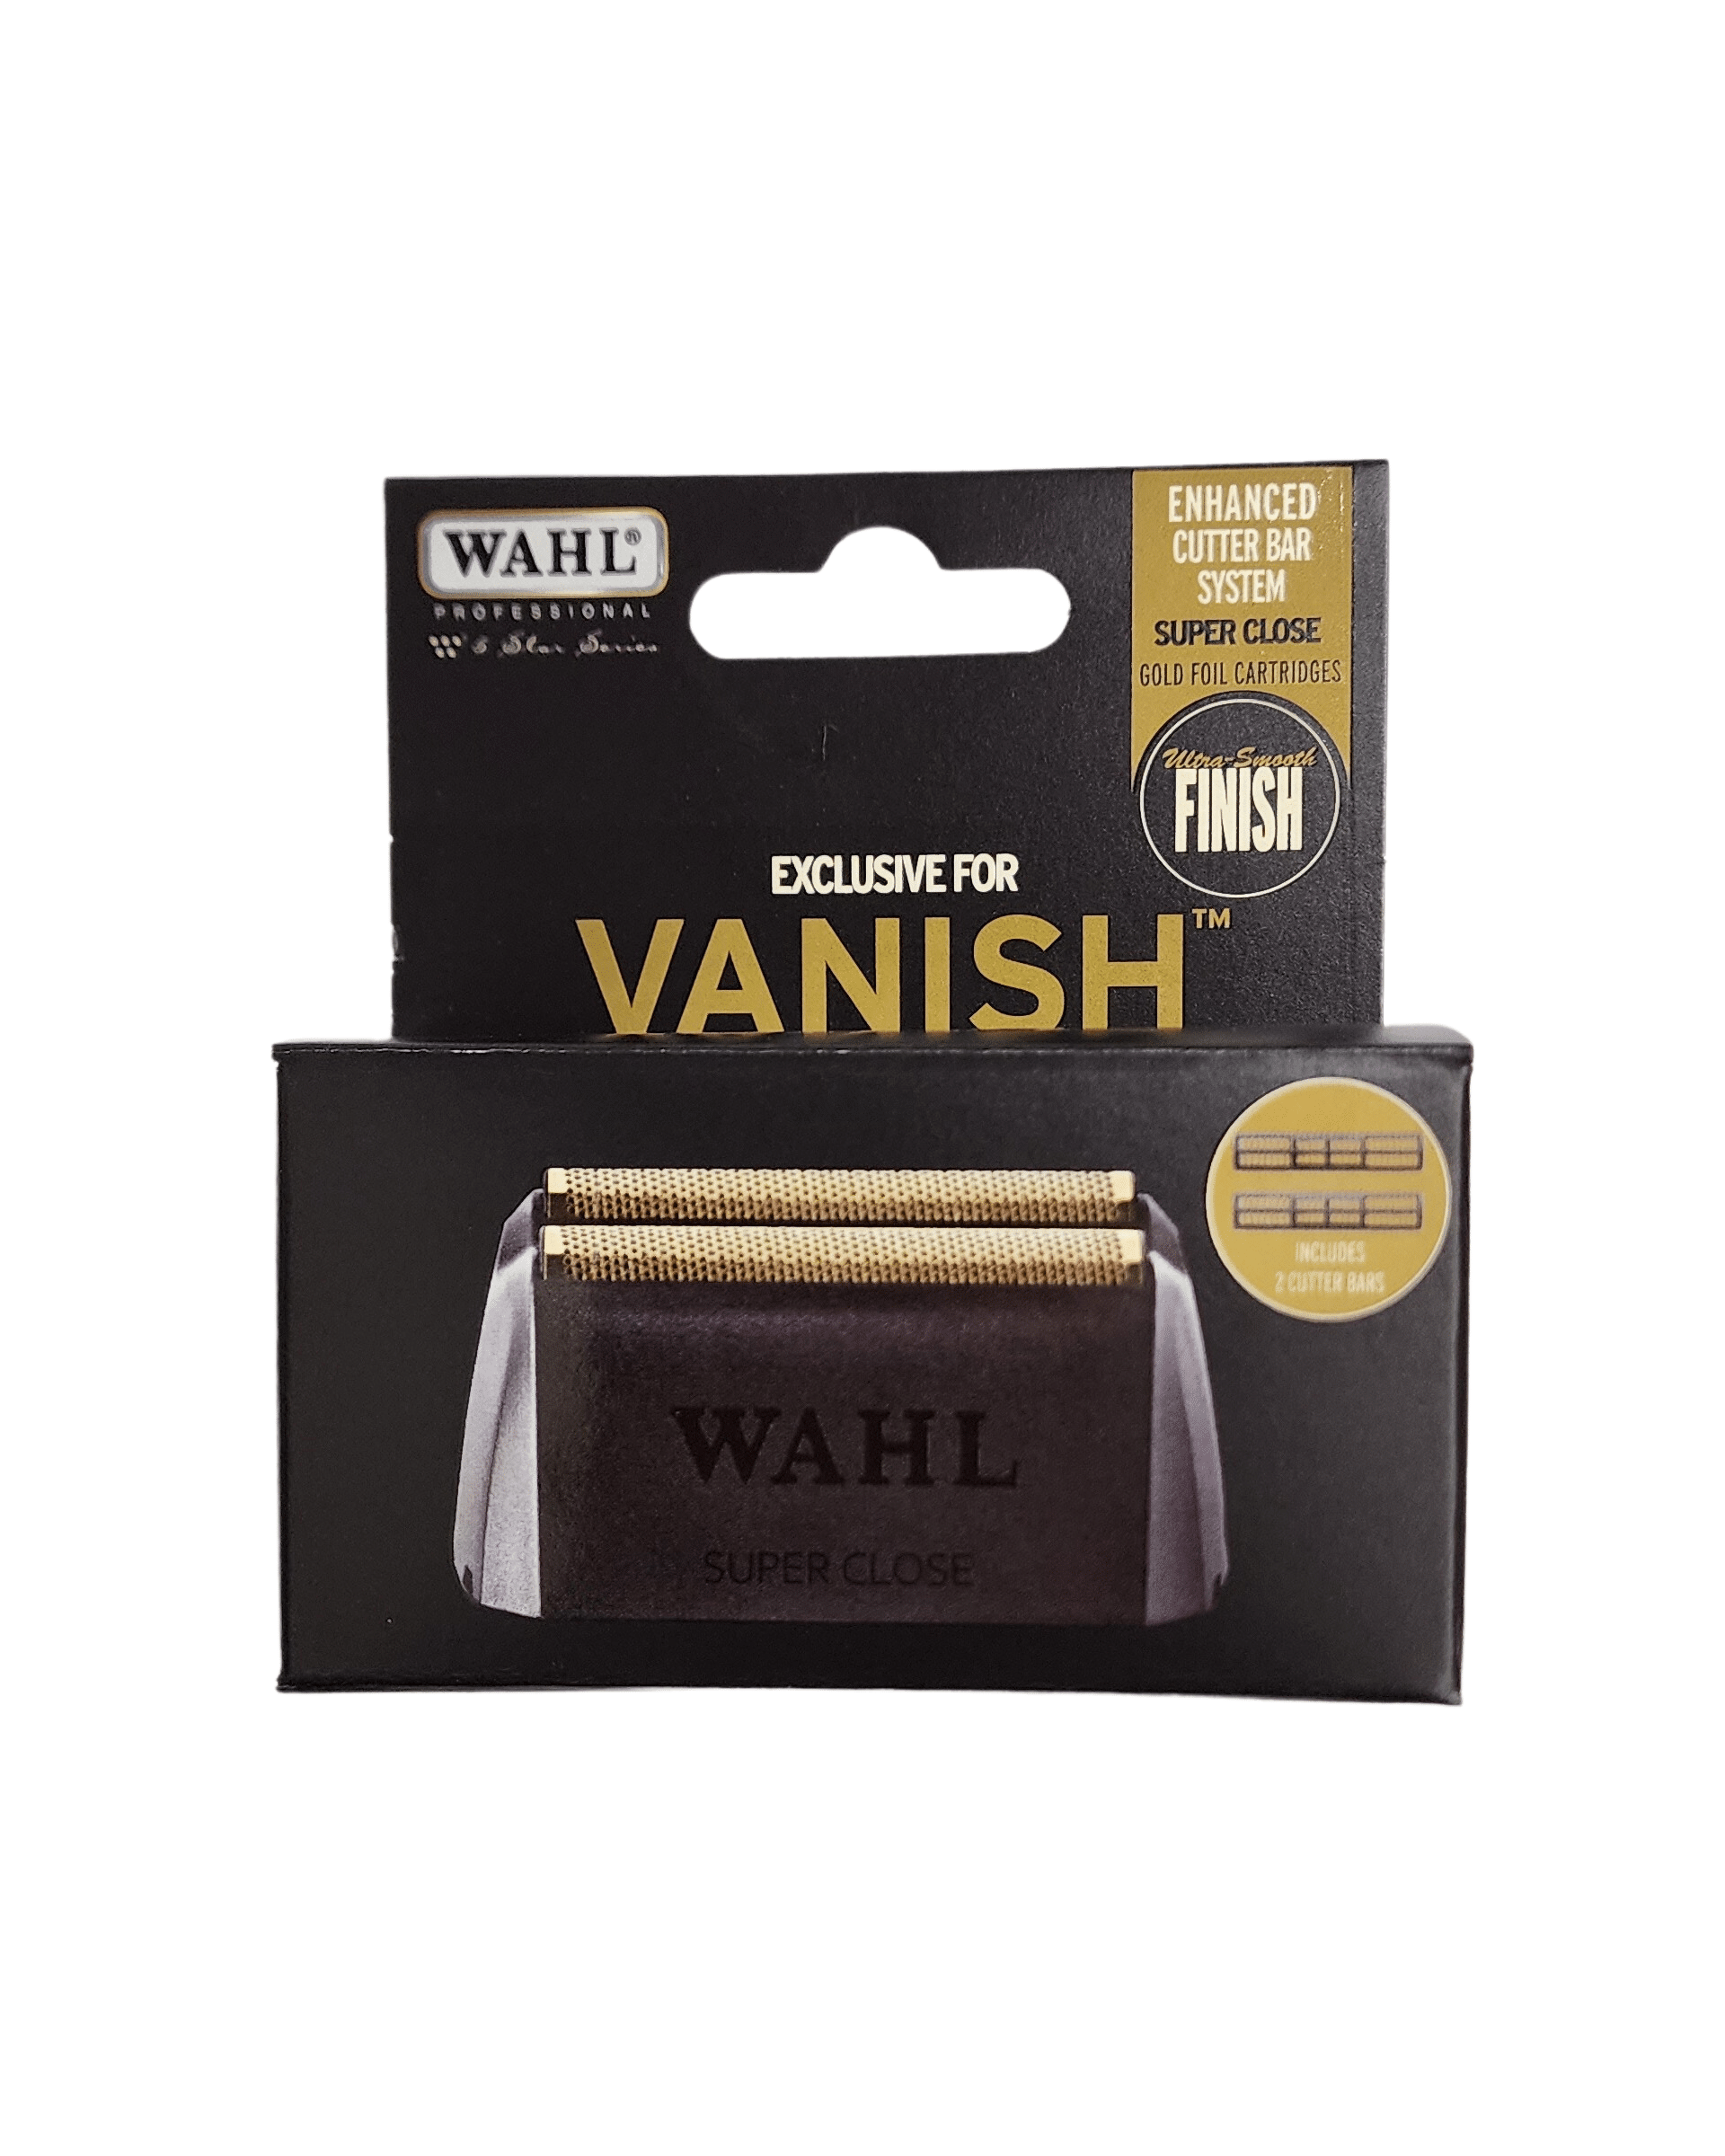 Wahl Vanish Shaver Replacement Foil & Cutter #3022905 - Barber Depot -  Barber Supply